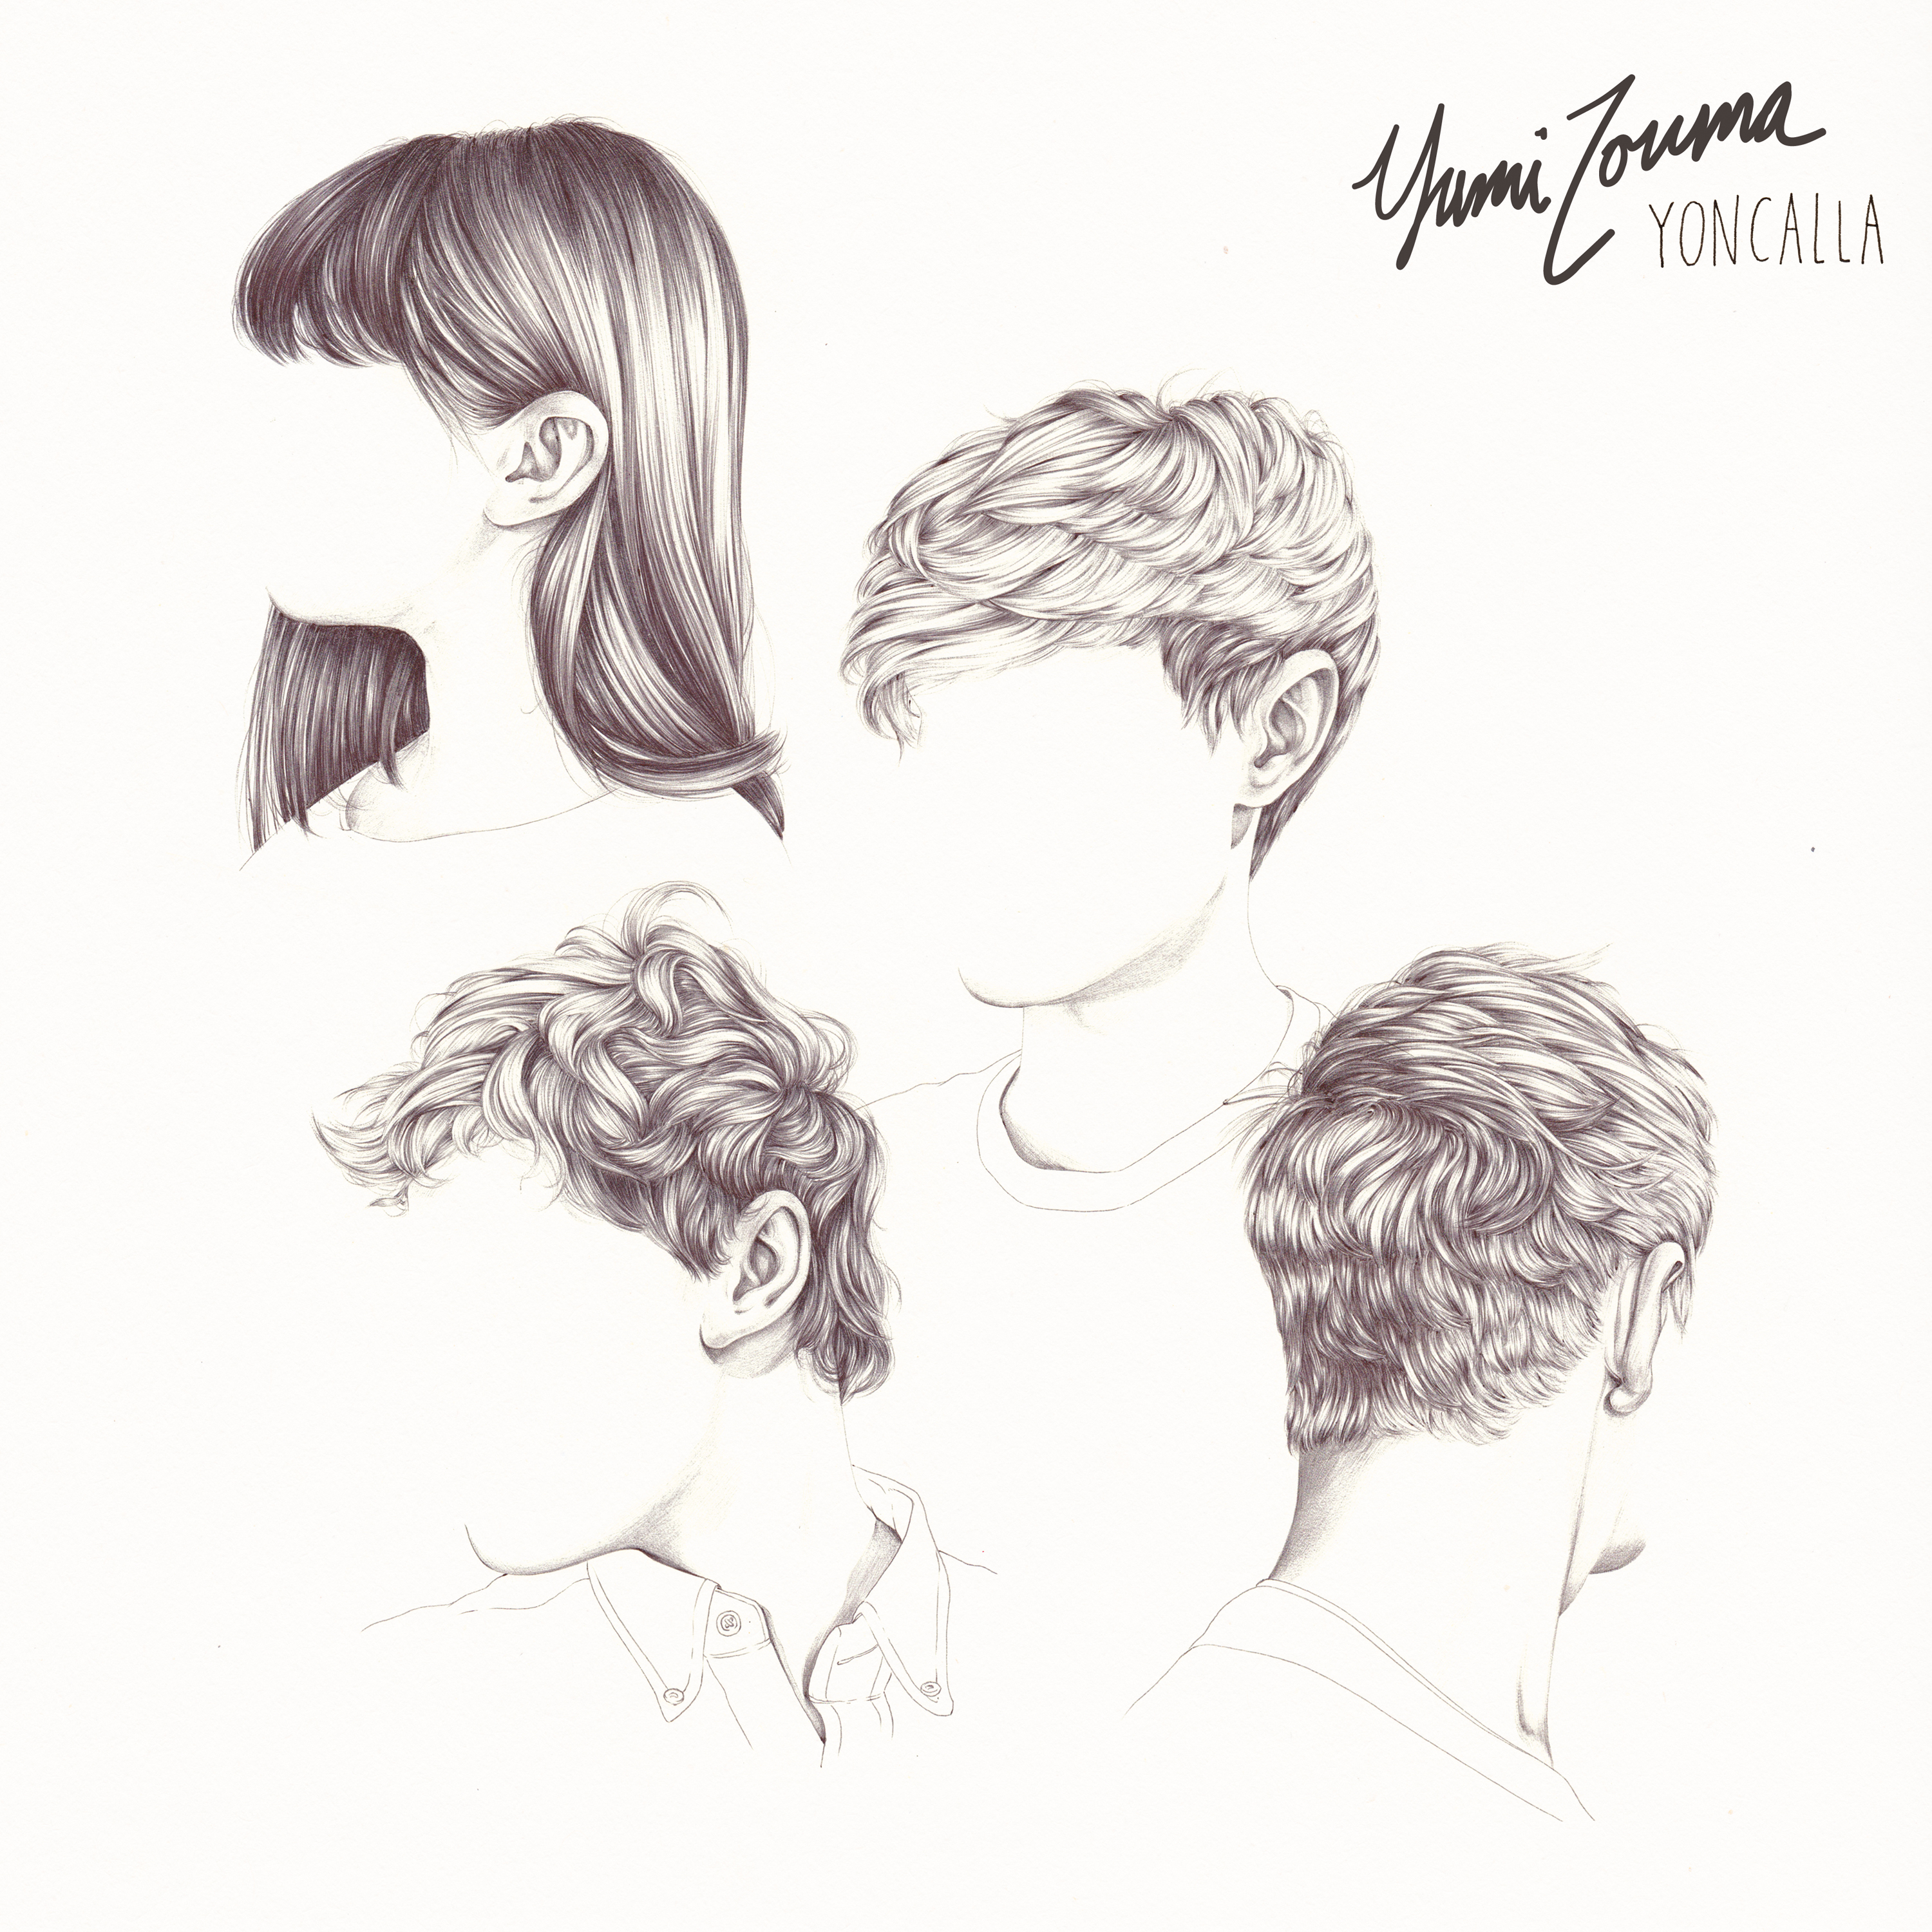 Yumi Zouma - Yoncalla (Cover)